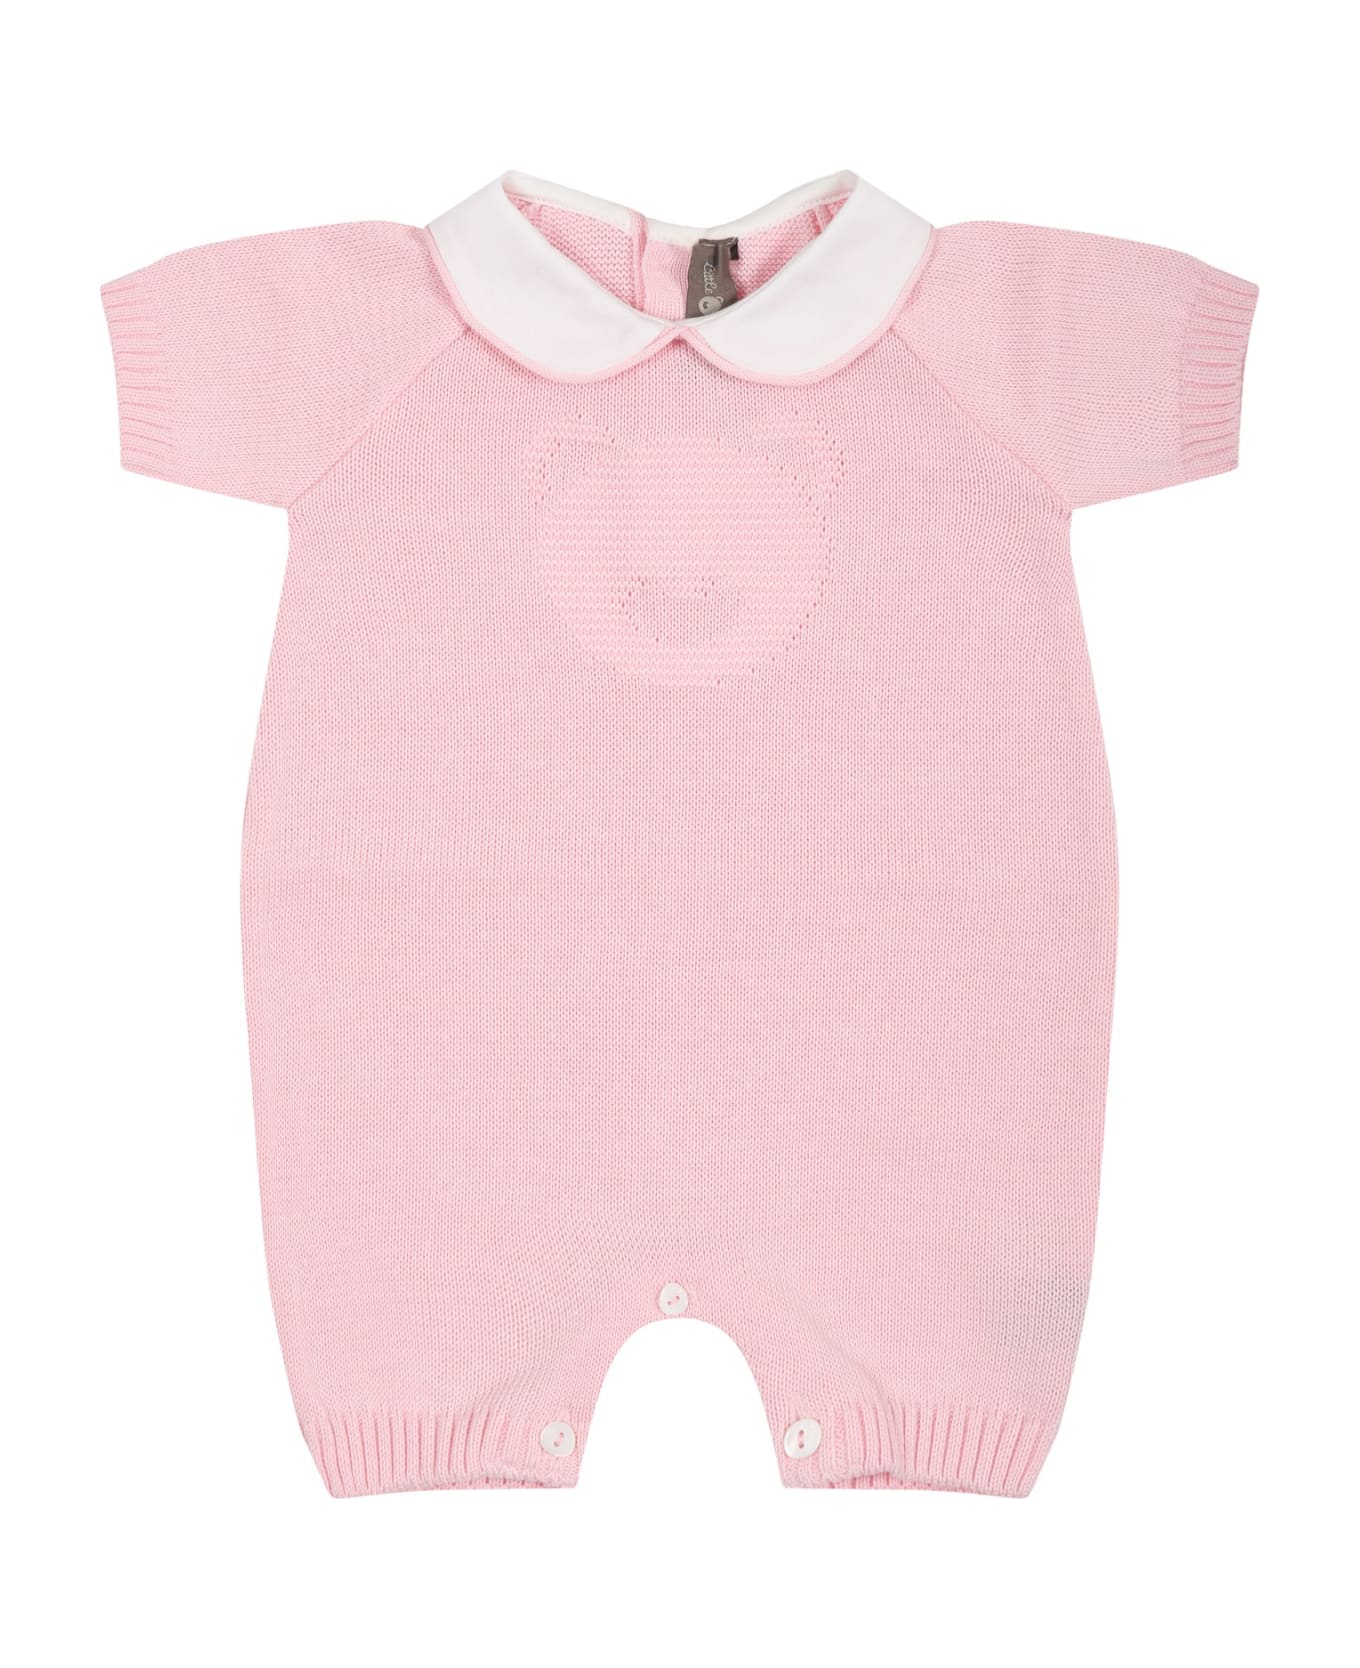 Little Bear Pink Romper For Baby Girl - Pink